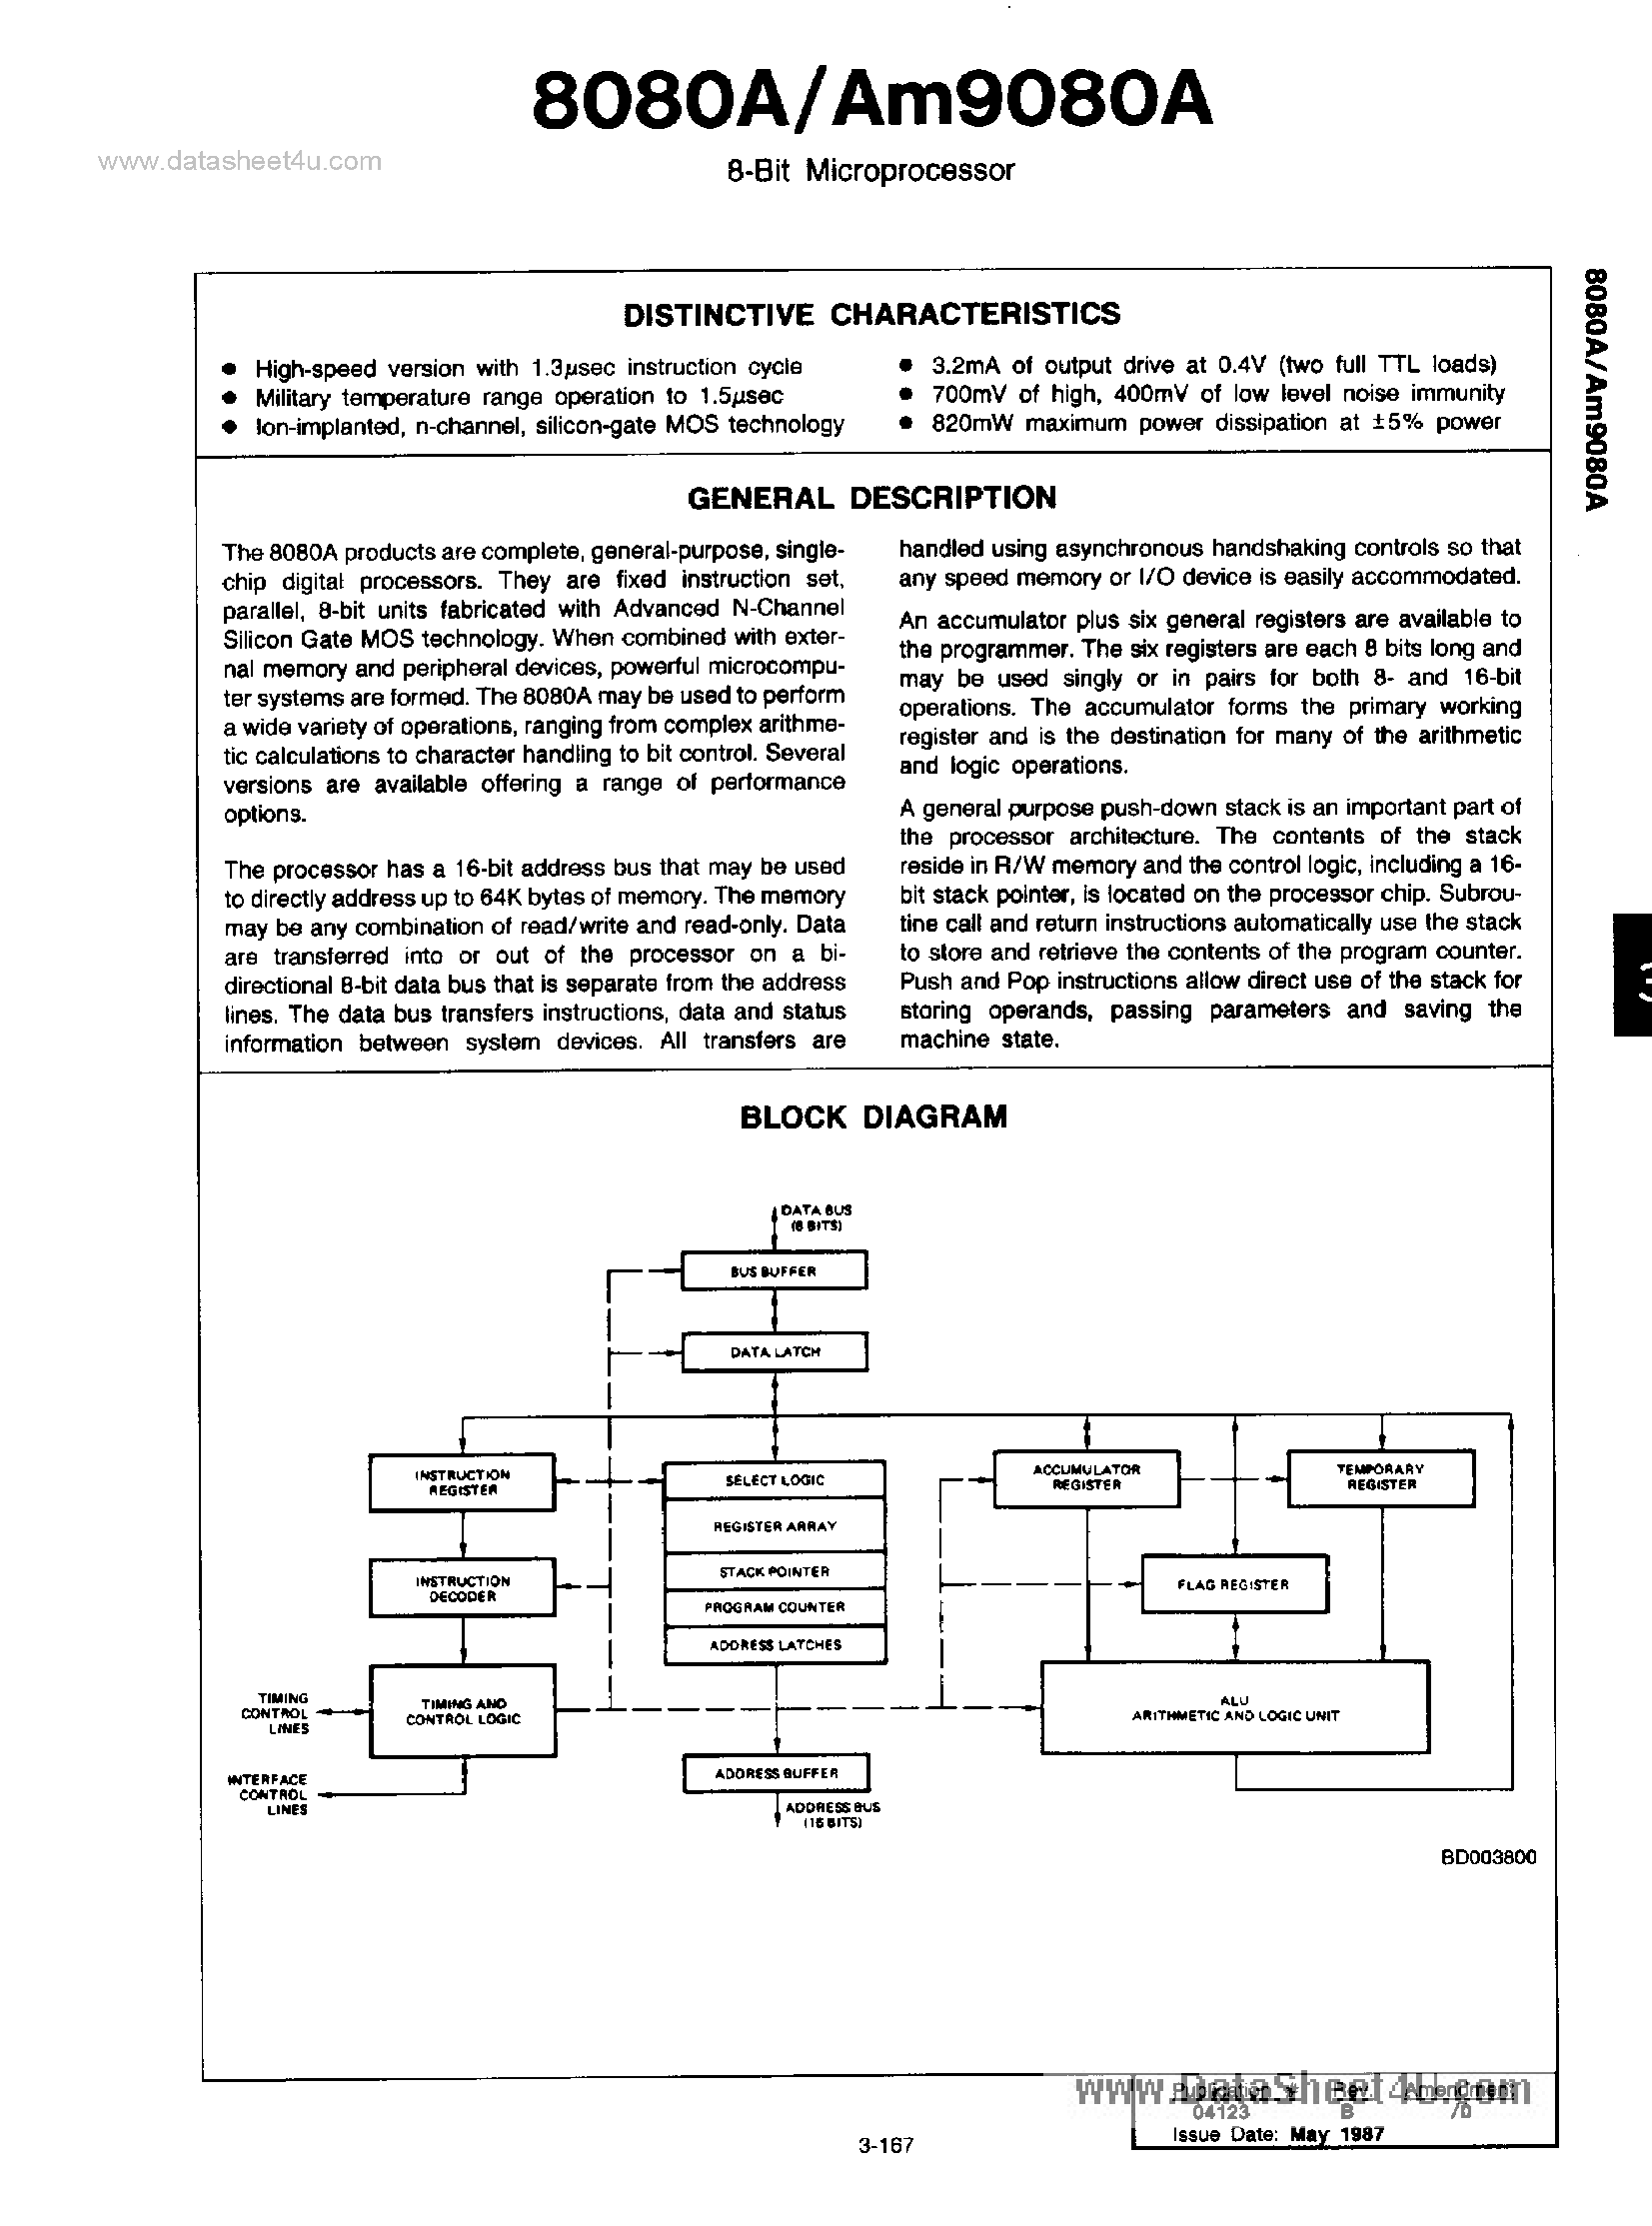 Datasheet AM9080A - 8-Bit Microprocessor page 1